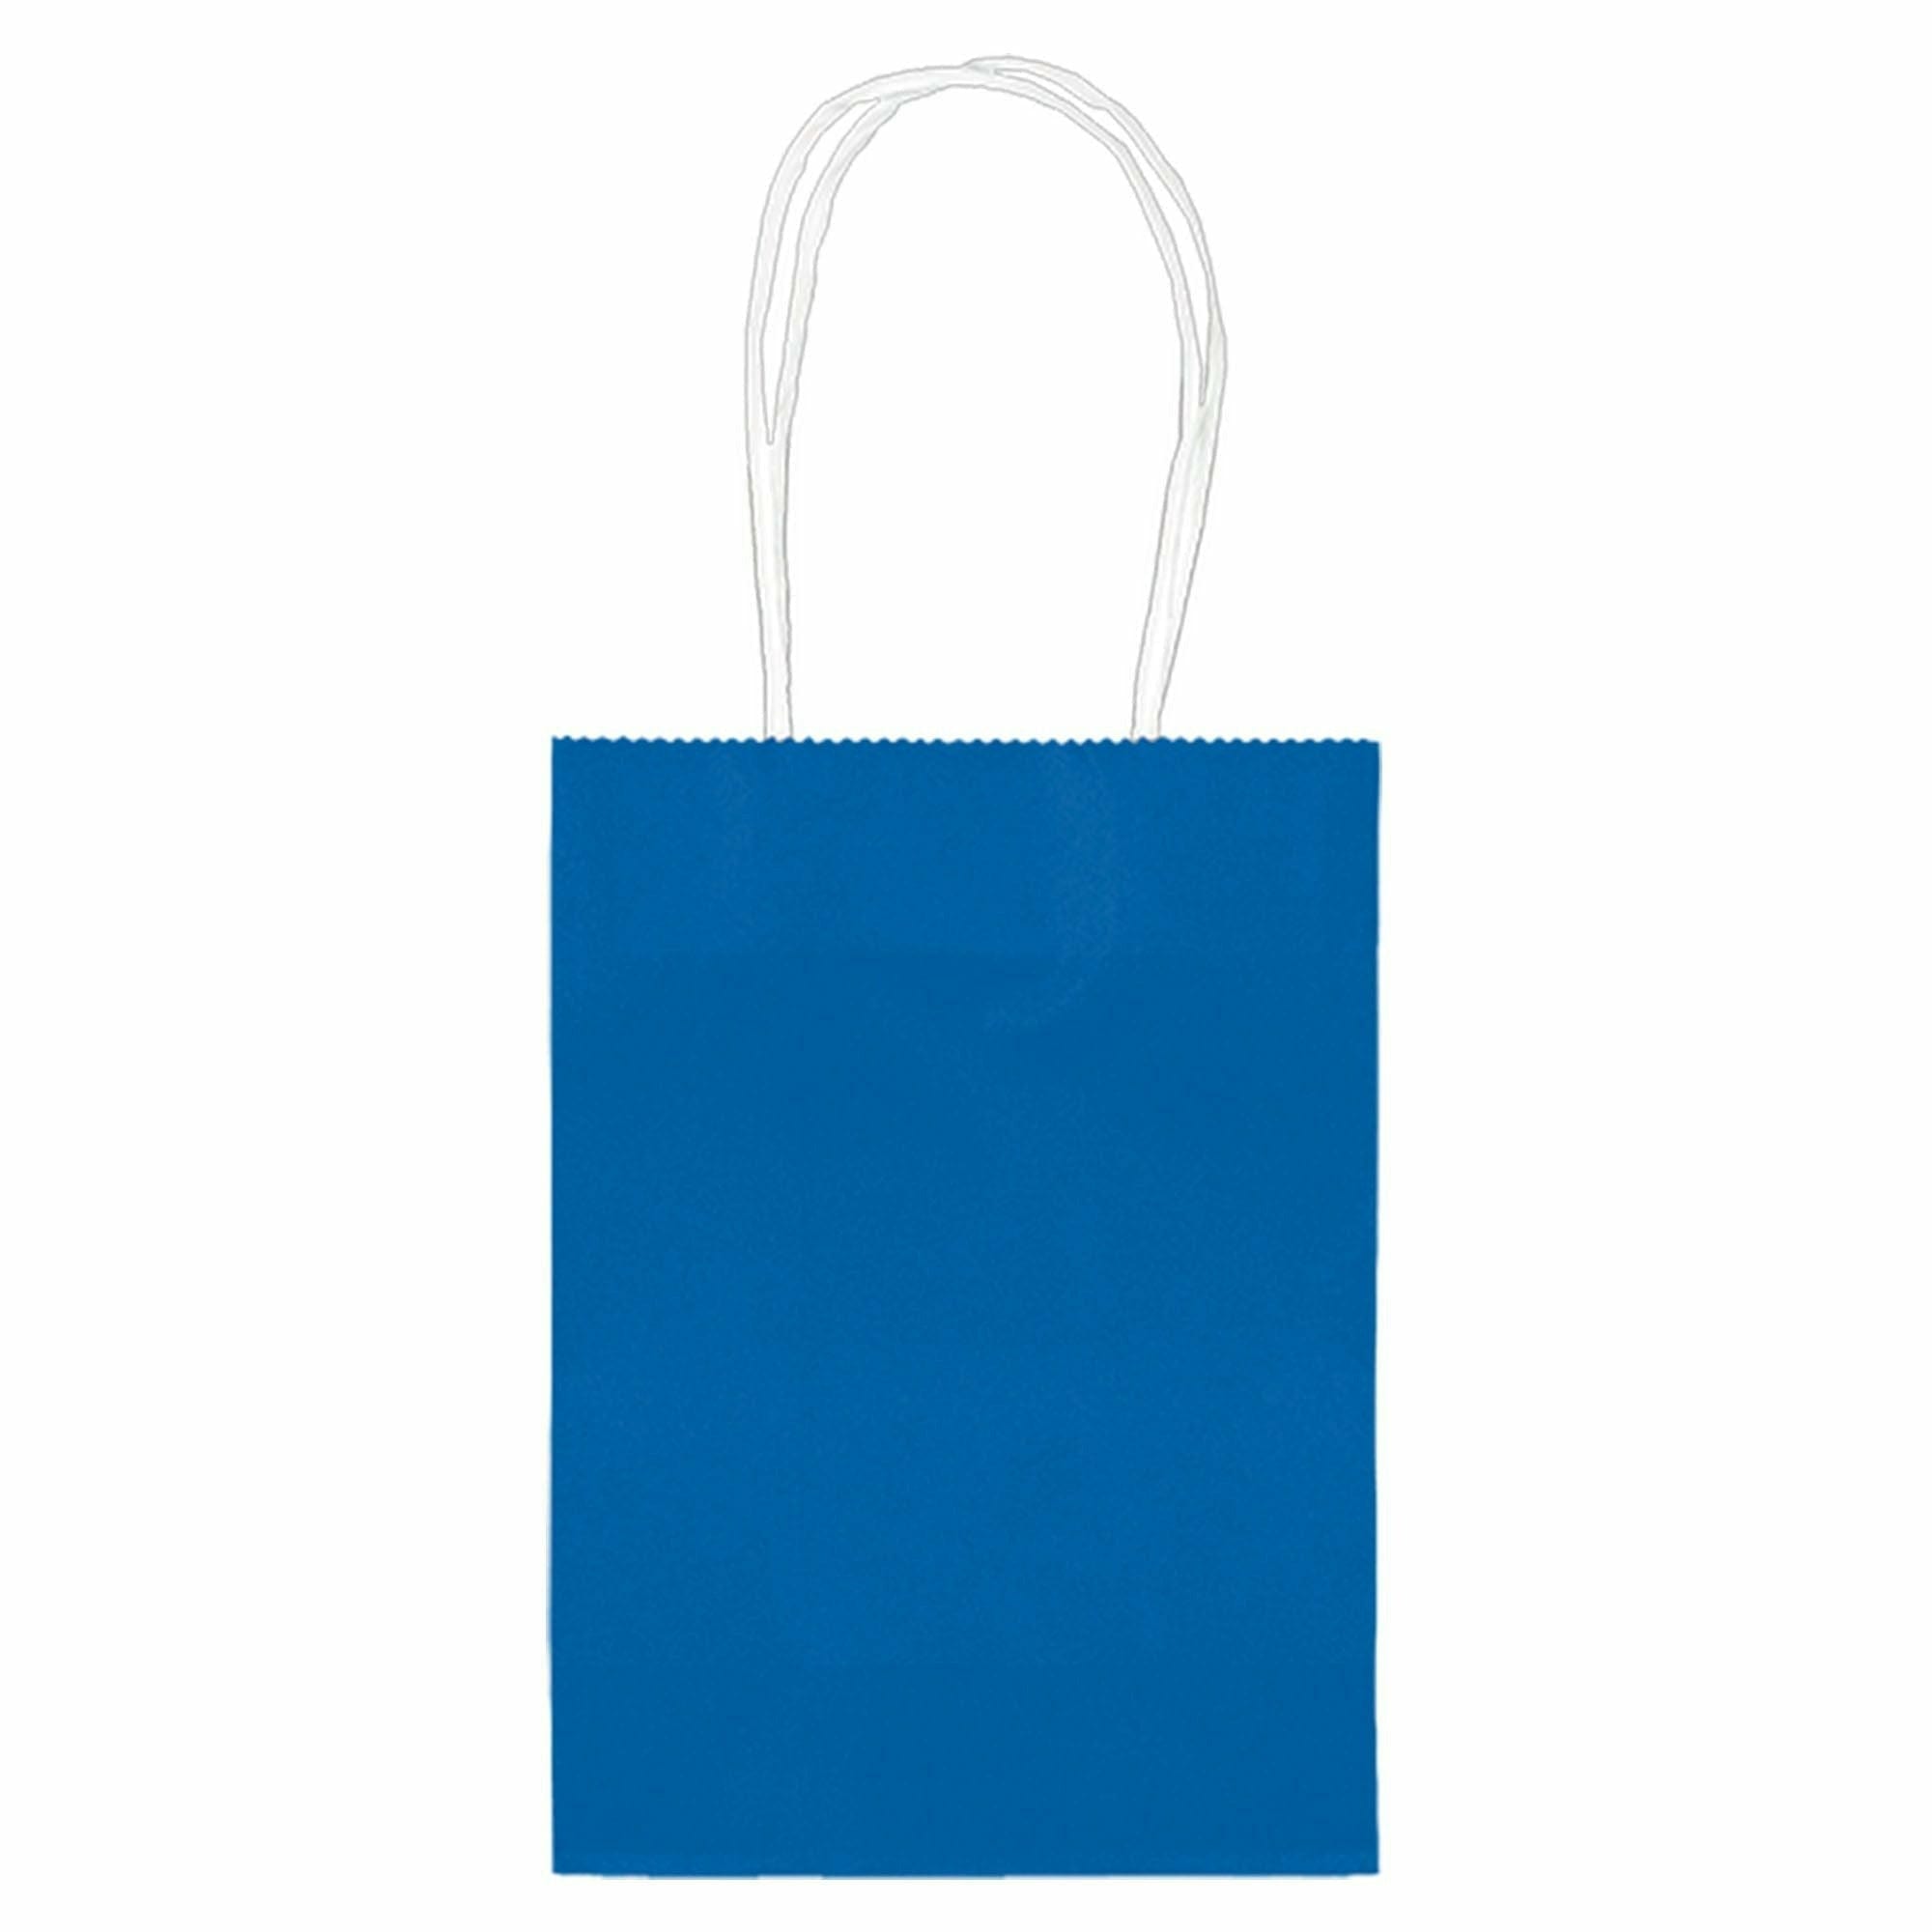 Amscan GIFT WRAP Kraft Bag - Bright Royal Blue